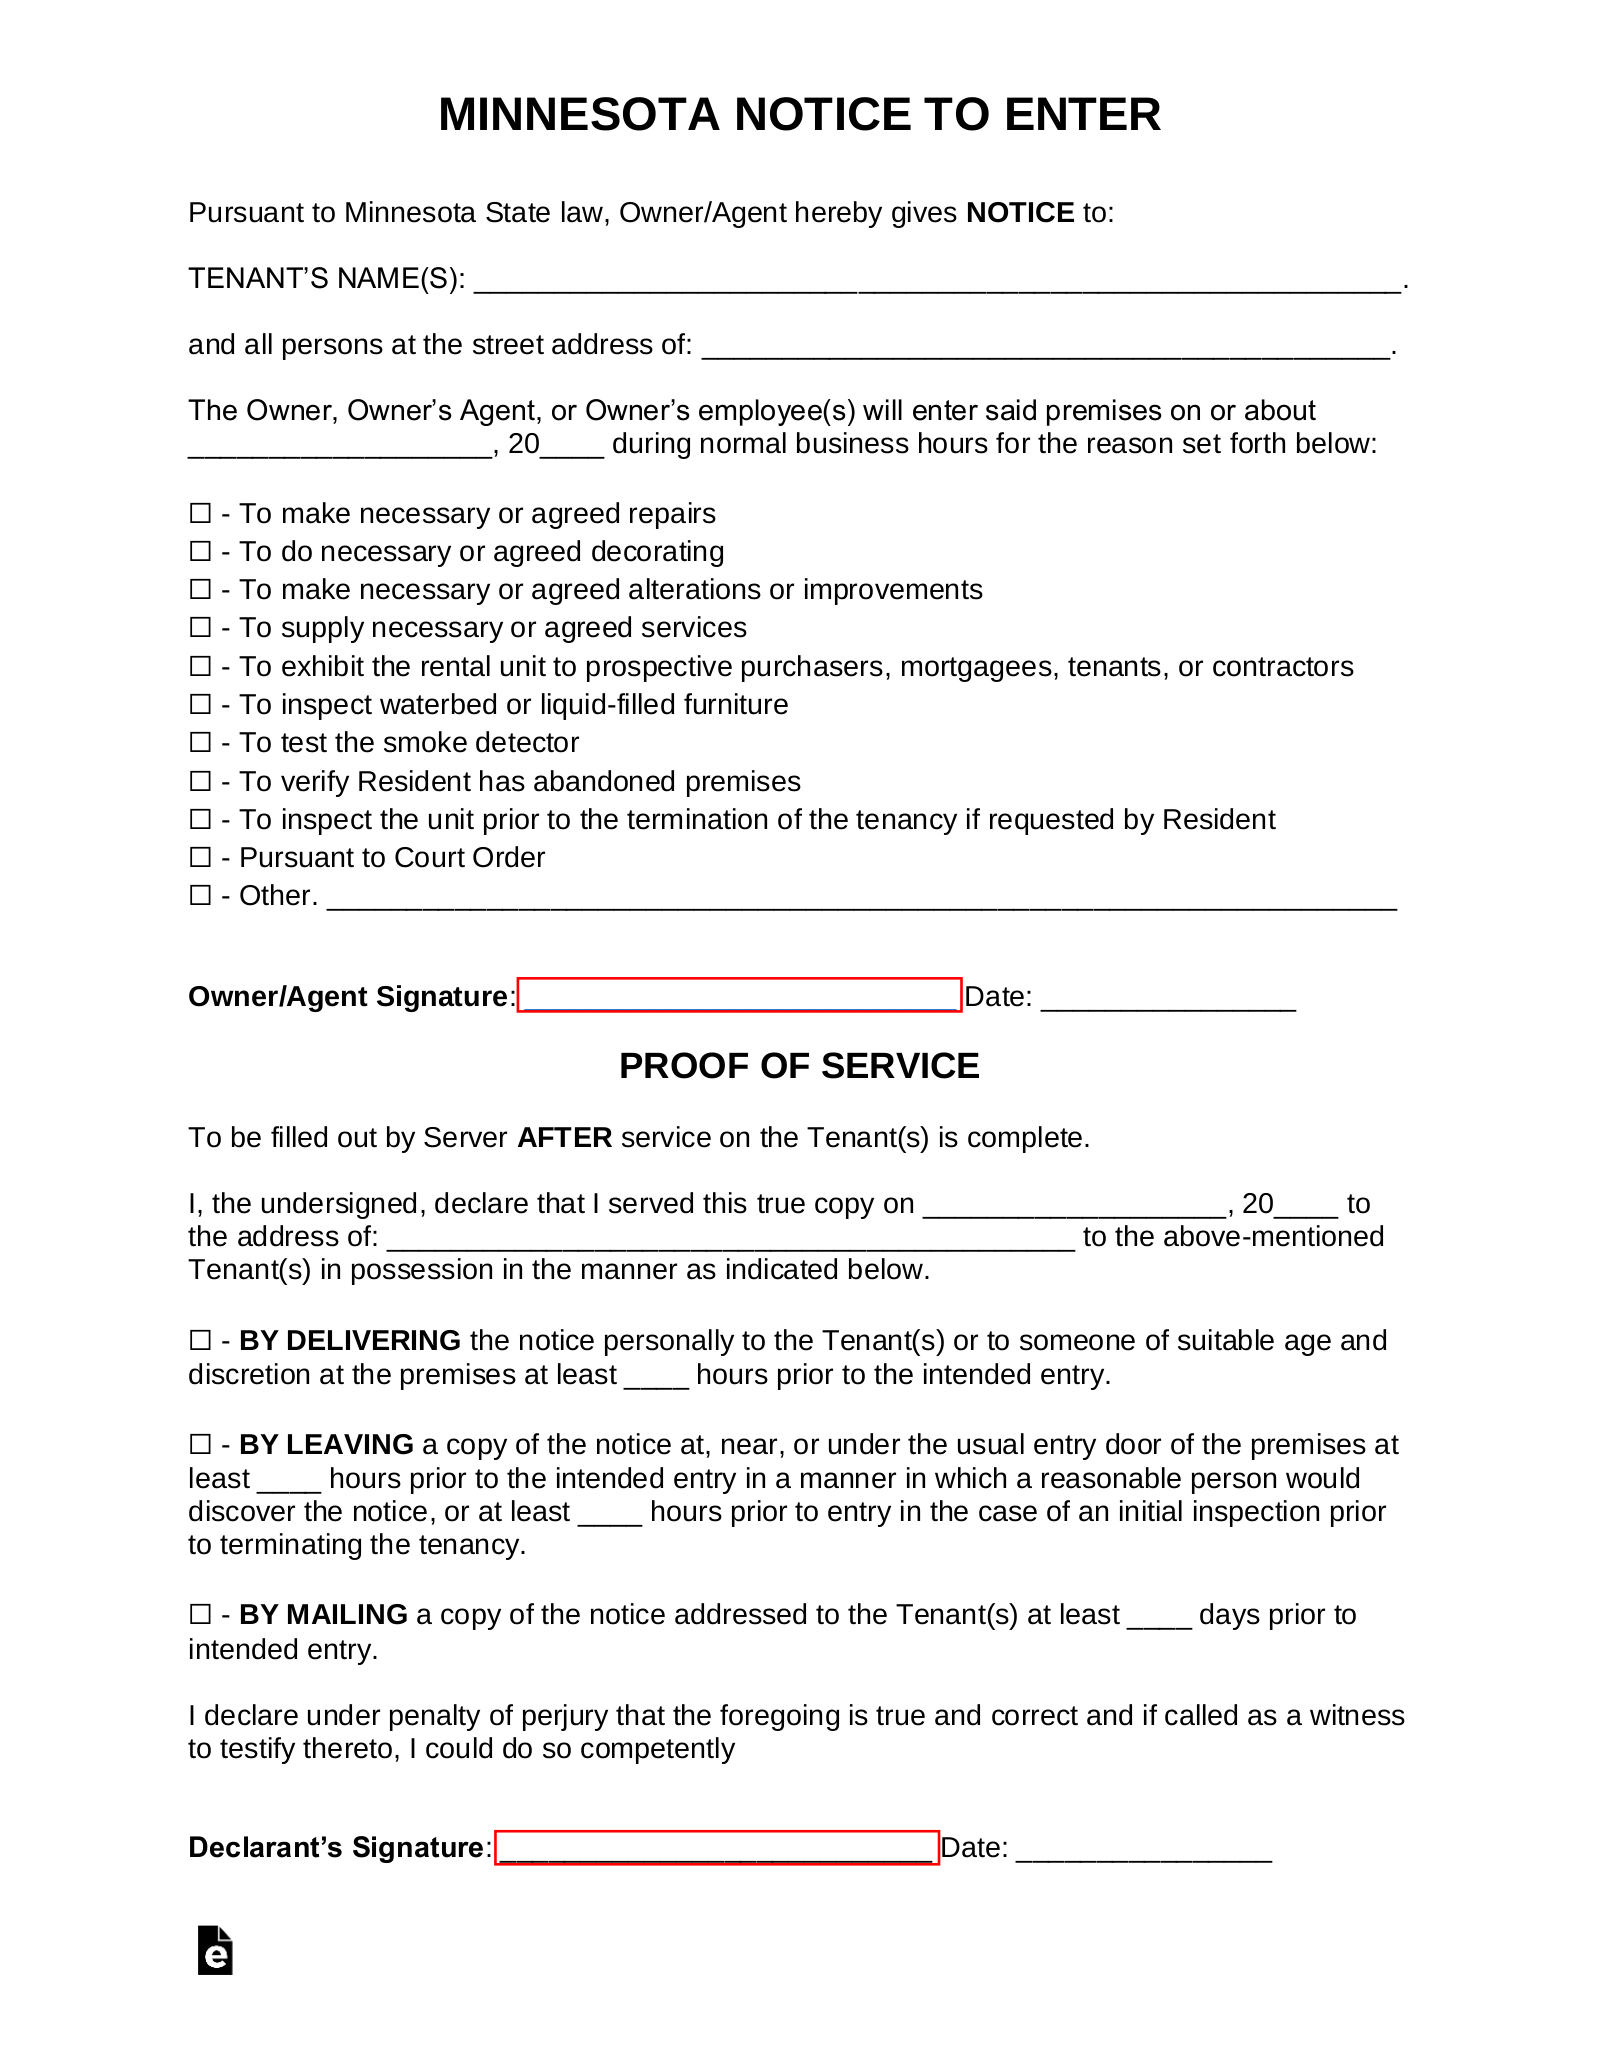 Minnesota Landlord Notice to Enter Form